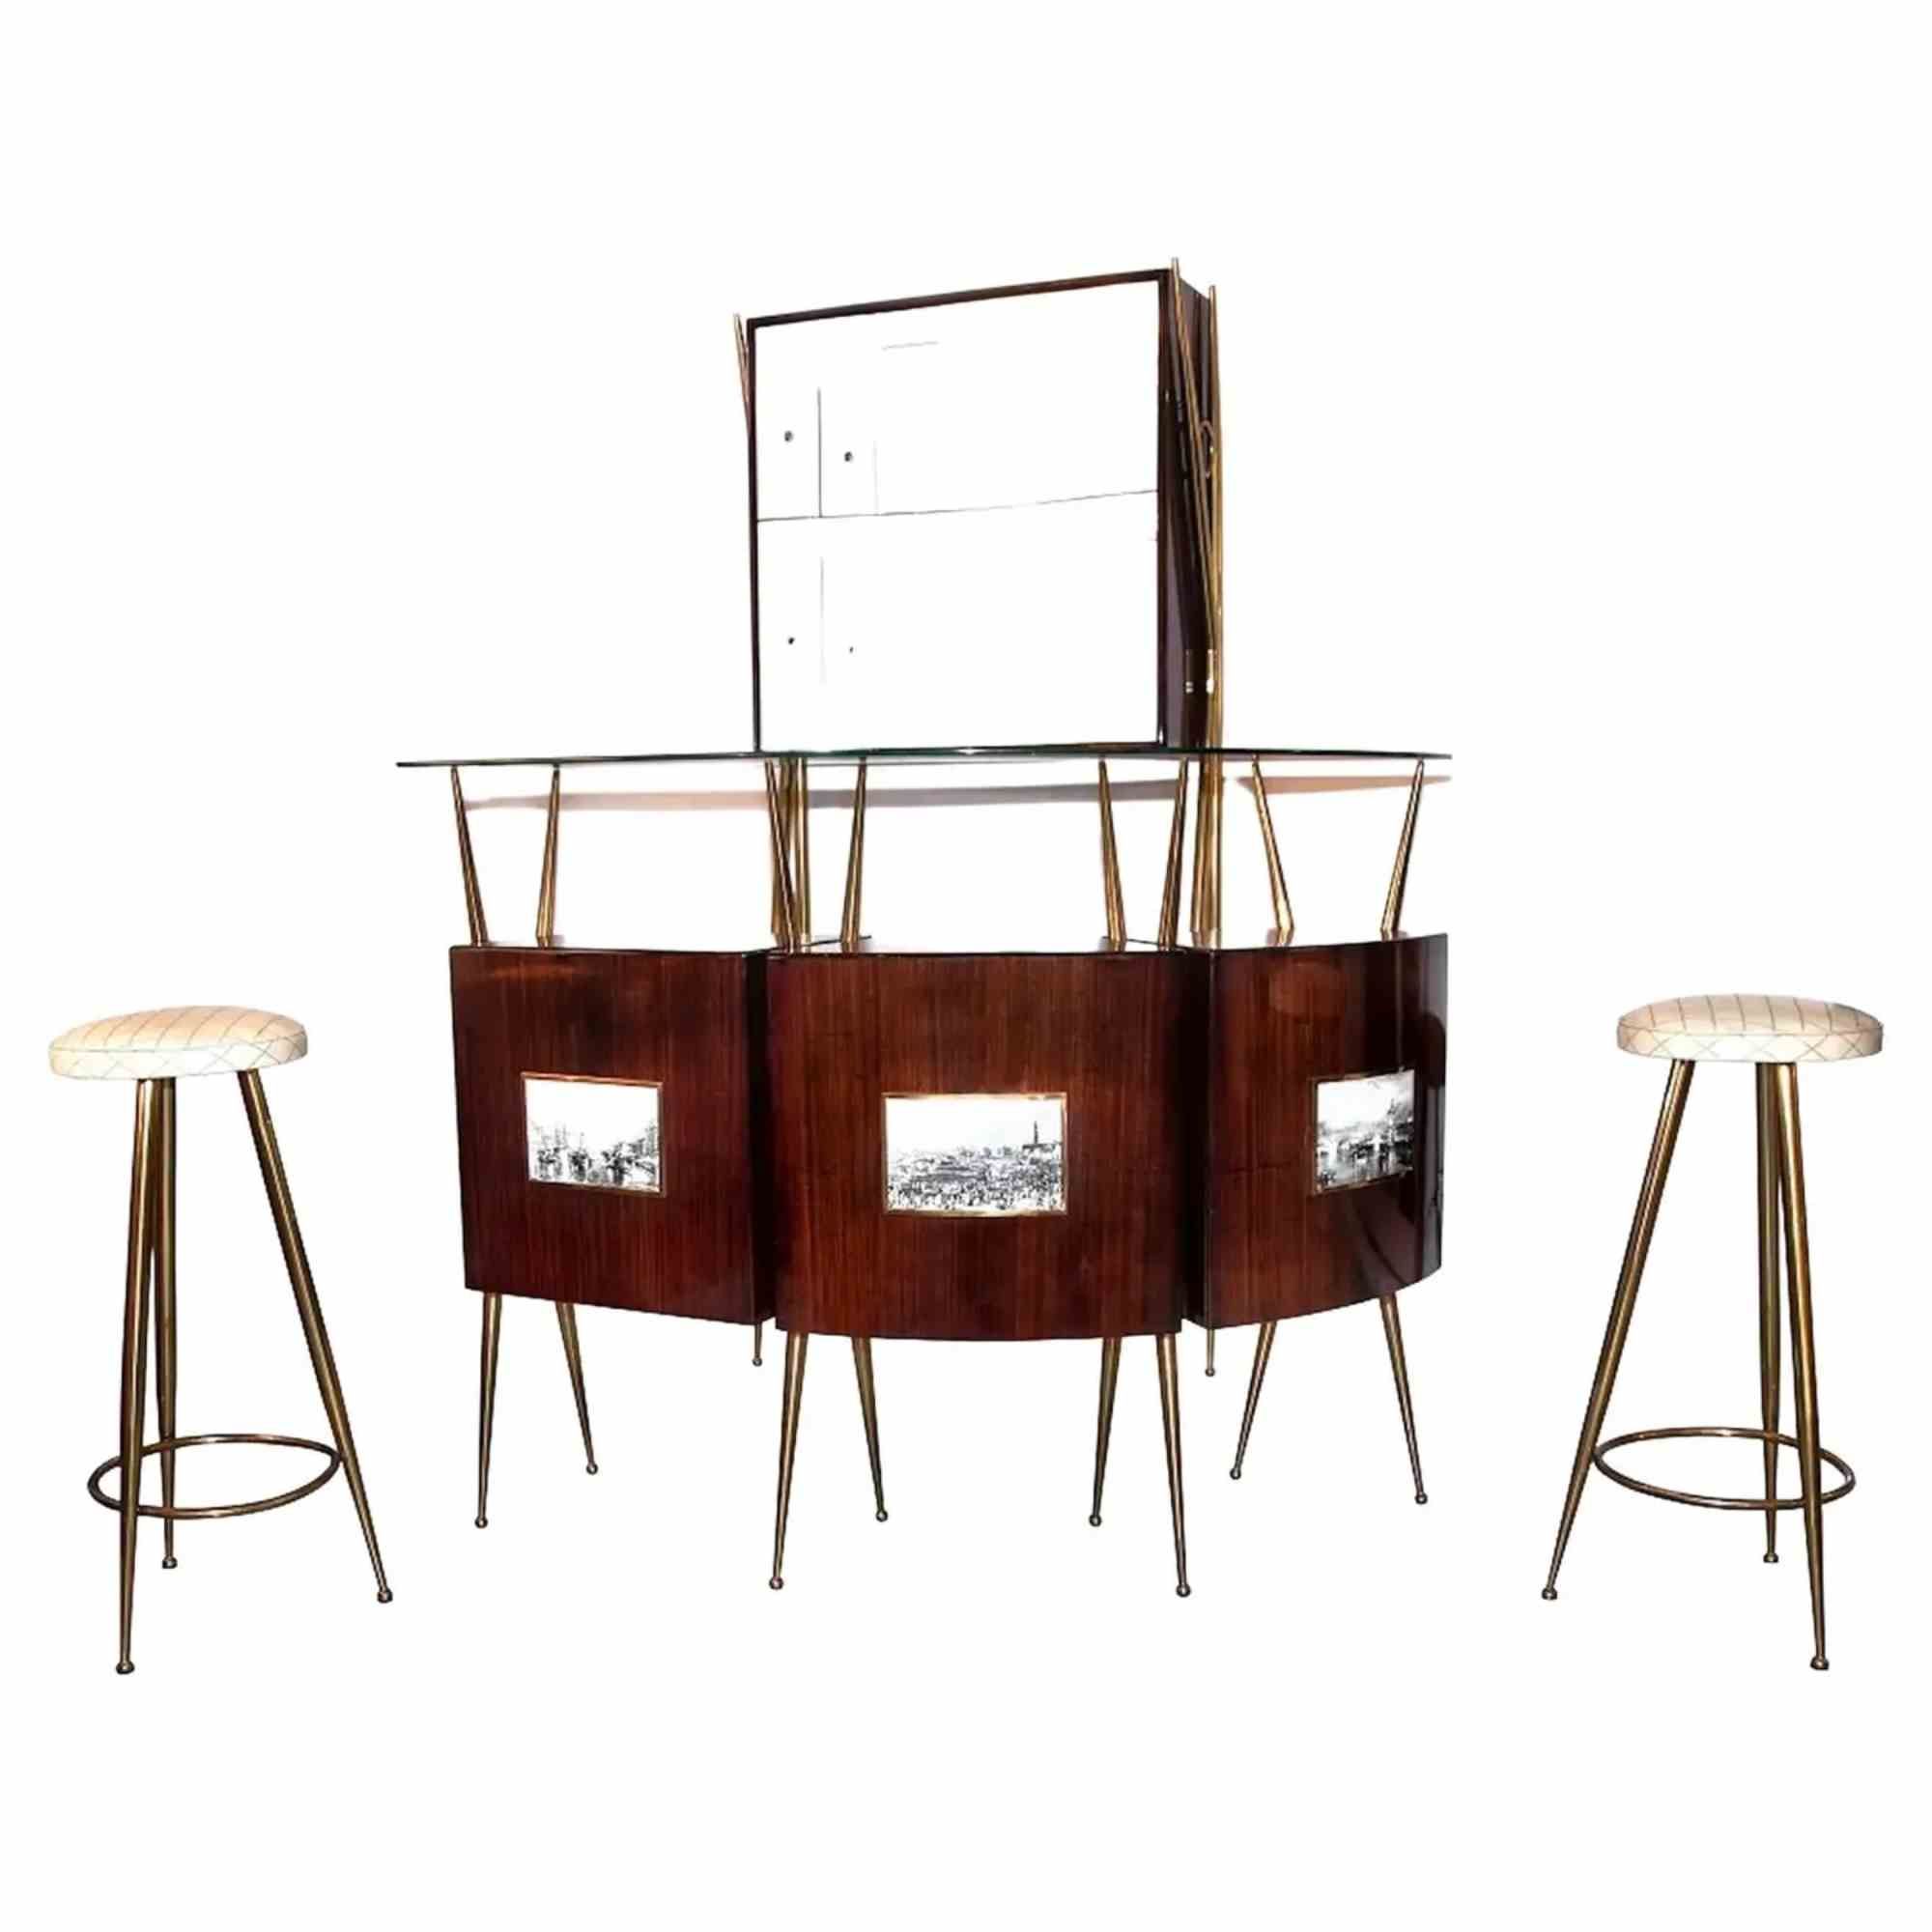 Vintage Italian Dry Bar, contemporary furniture by Gio Ponti